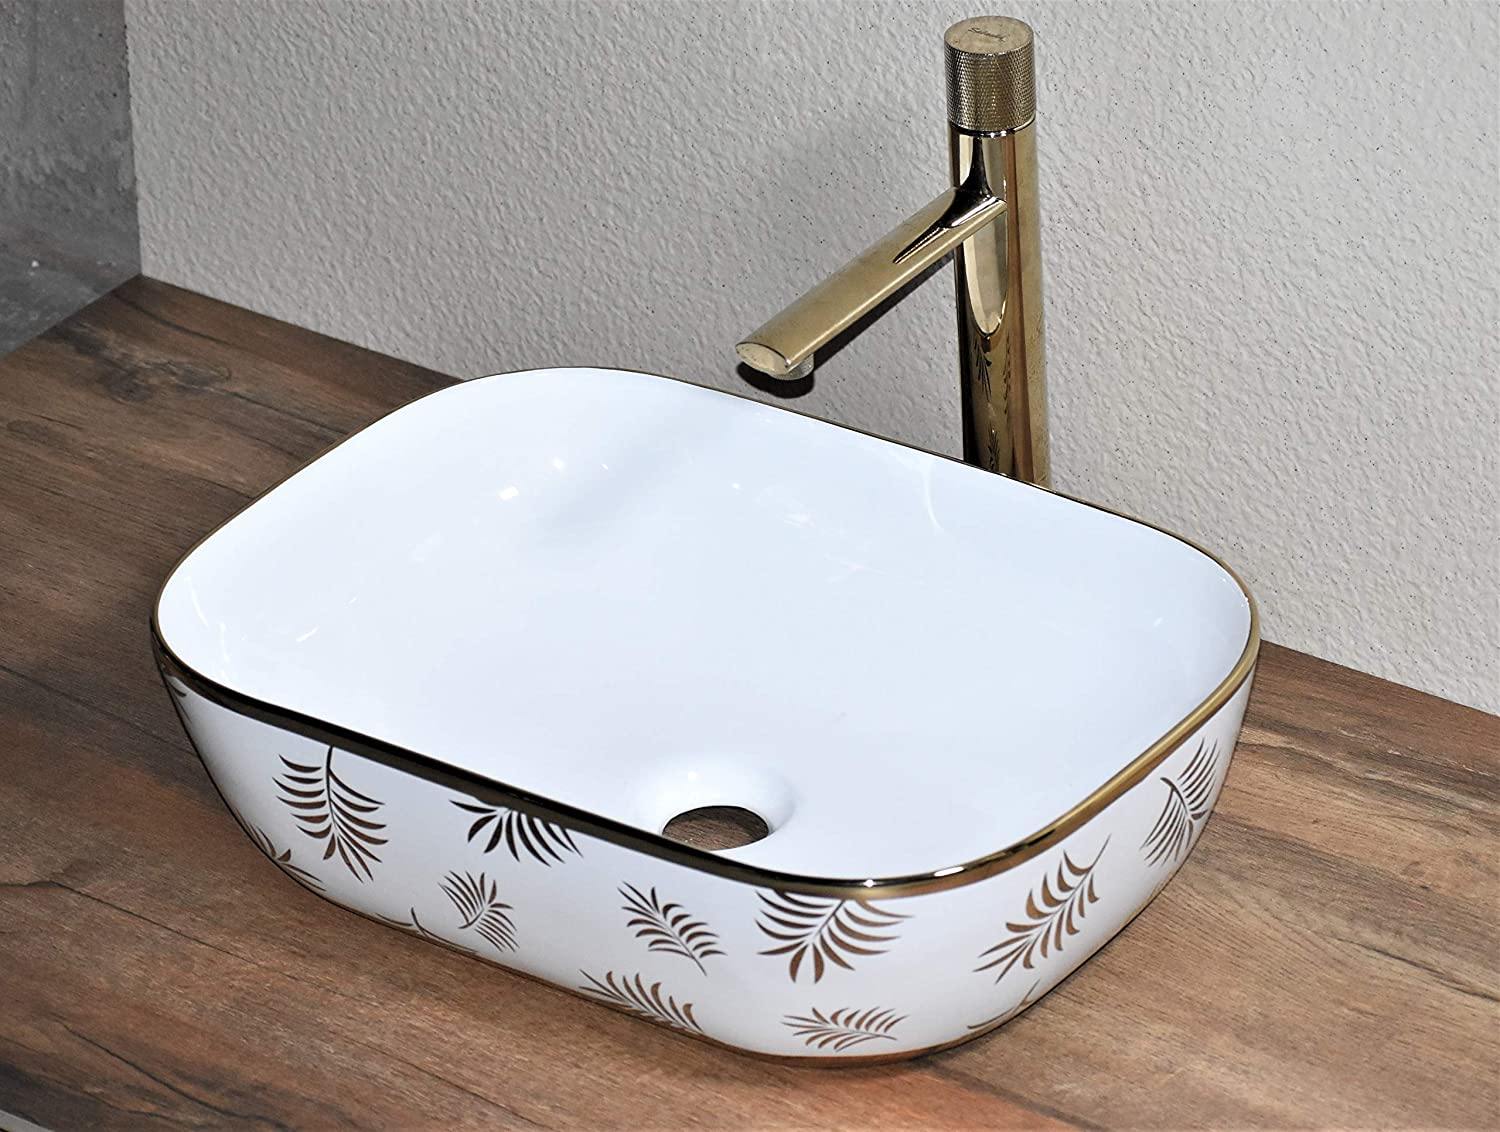 Ceramic Premium Desisgner Table Top Over Counter Vessel Sink Wash Basin for Bathroom 18 X 13 X 6 Inch Gold White Basin For Bathroom - Bath Outlet